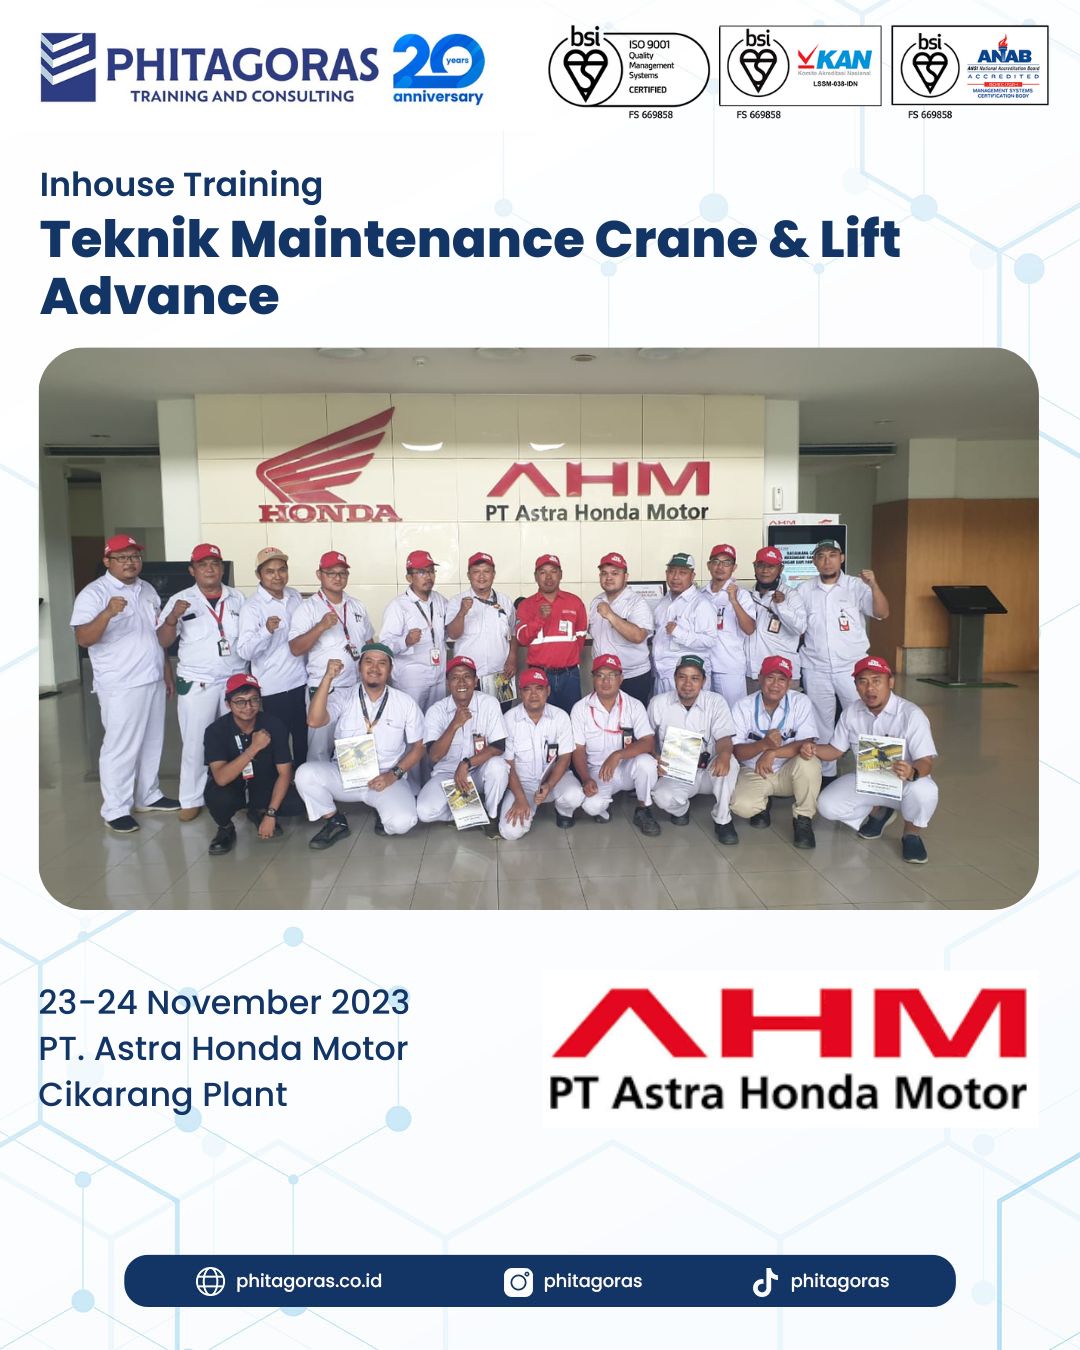 Inhouse Training Teknik Maintenance Crane & Lift Advance - PT. Astra Honda Motor - Cikarang Plant